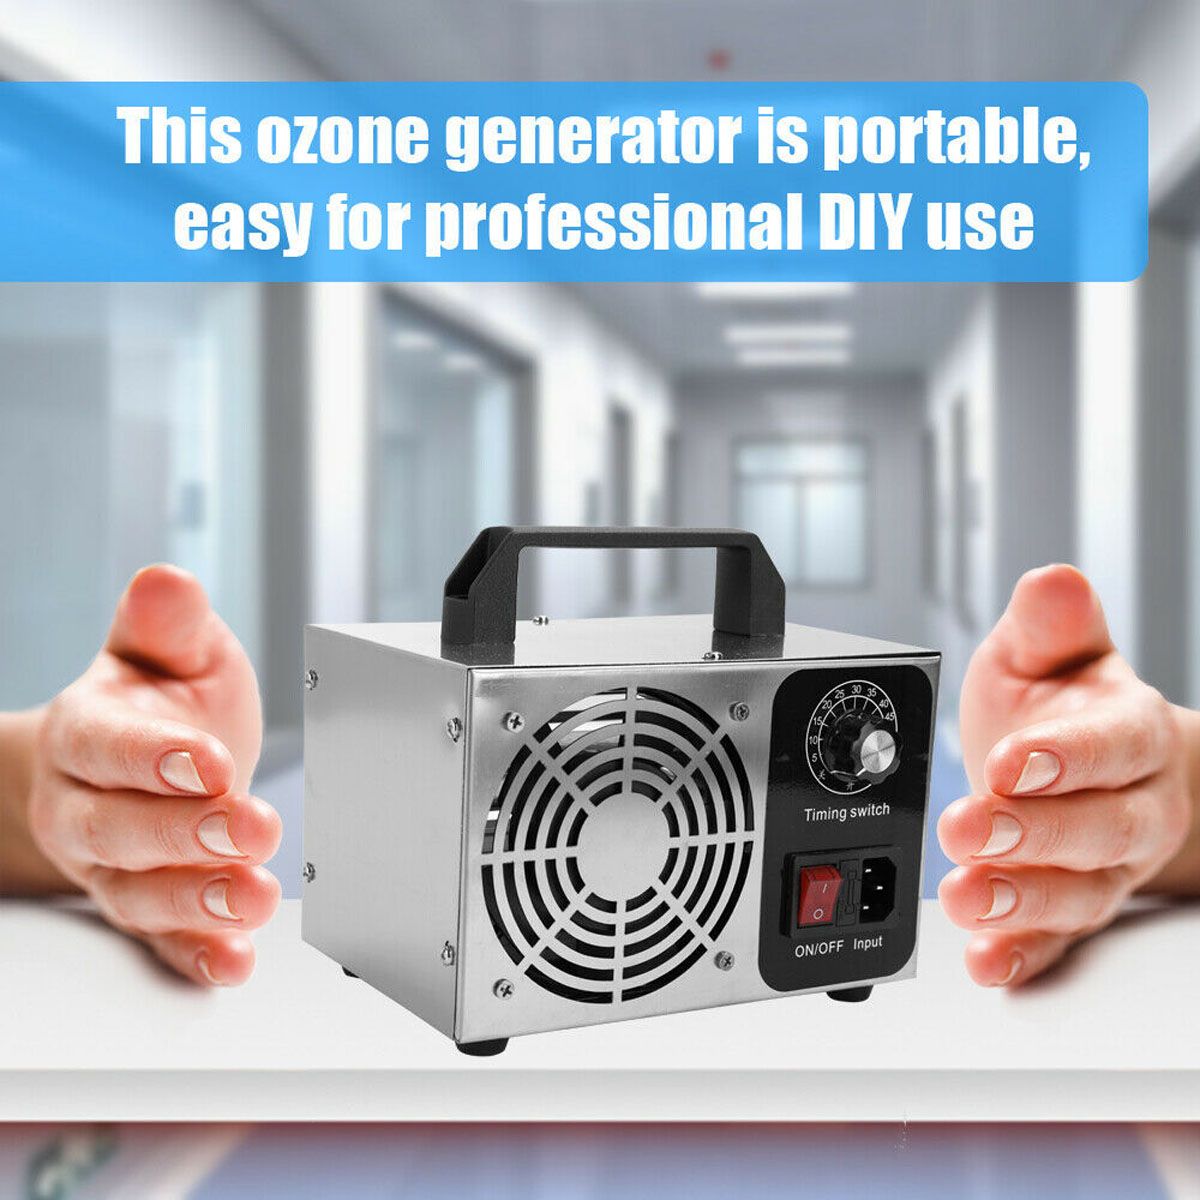 10gh-Ozone-Generator-Machine-Food-Purifier-Smoke-Odor-Air-Cleaner-Sterilizer-1674510